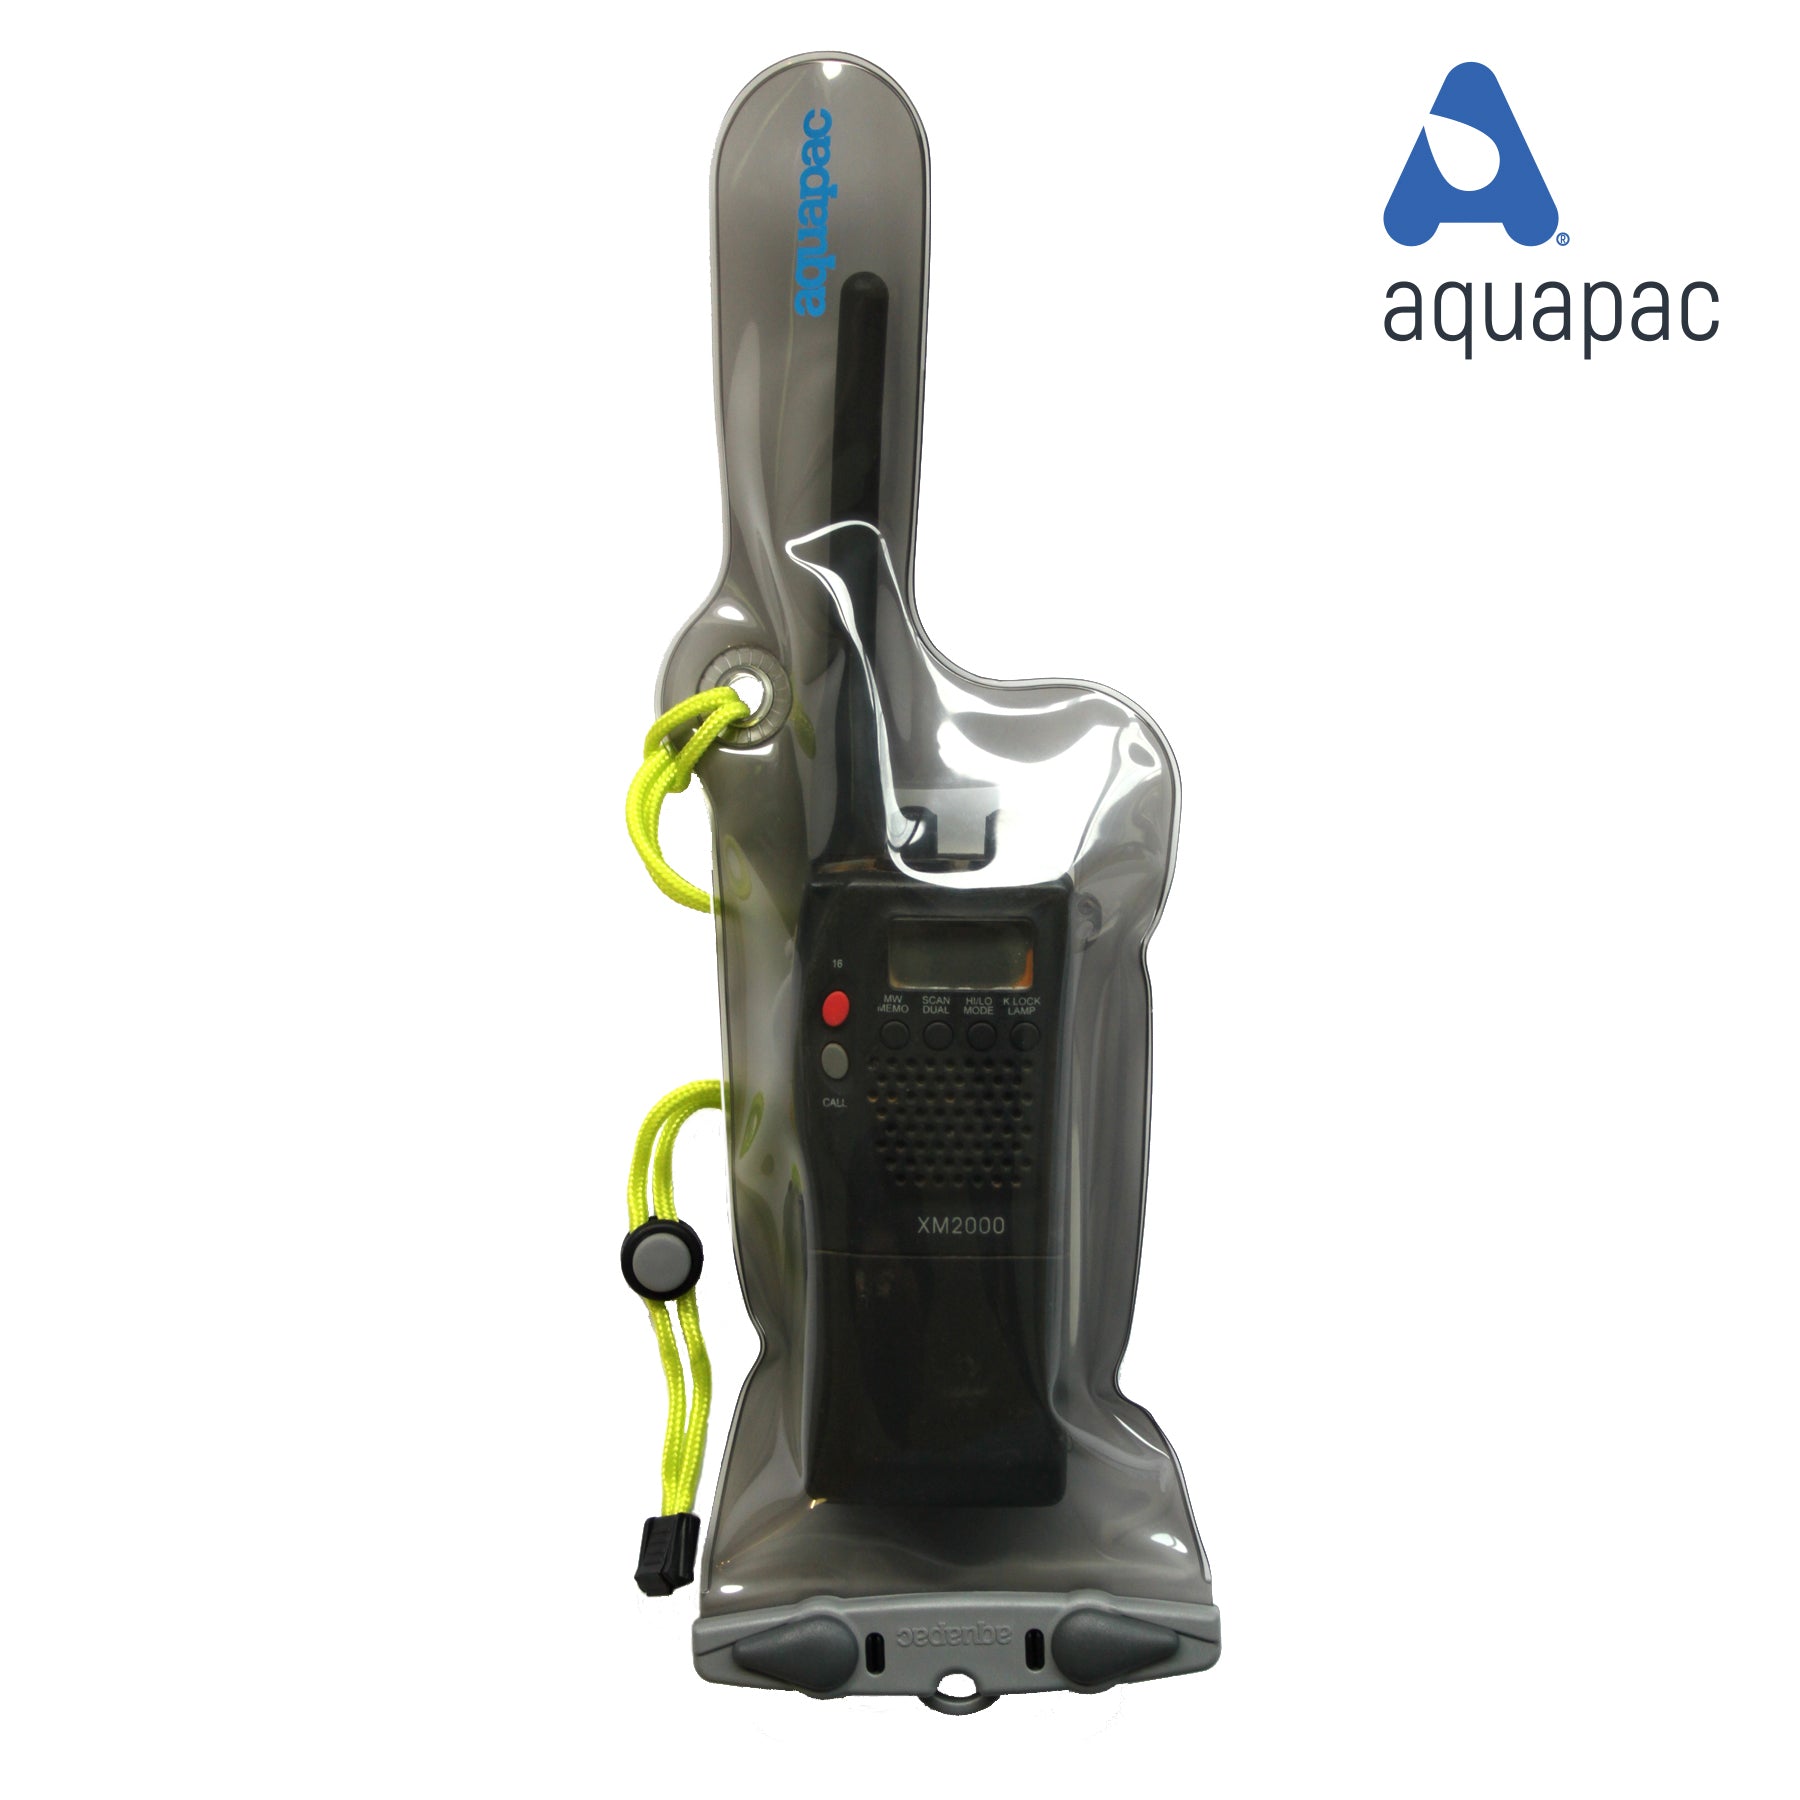 AQUAPAC Waterproof Small Classic Case for Satellite Phone VHF